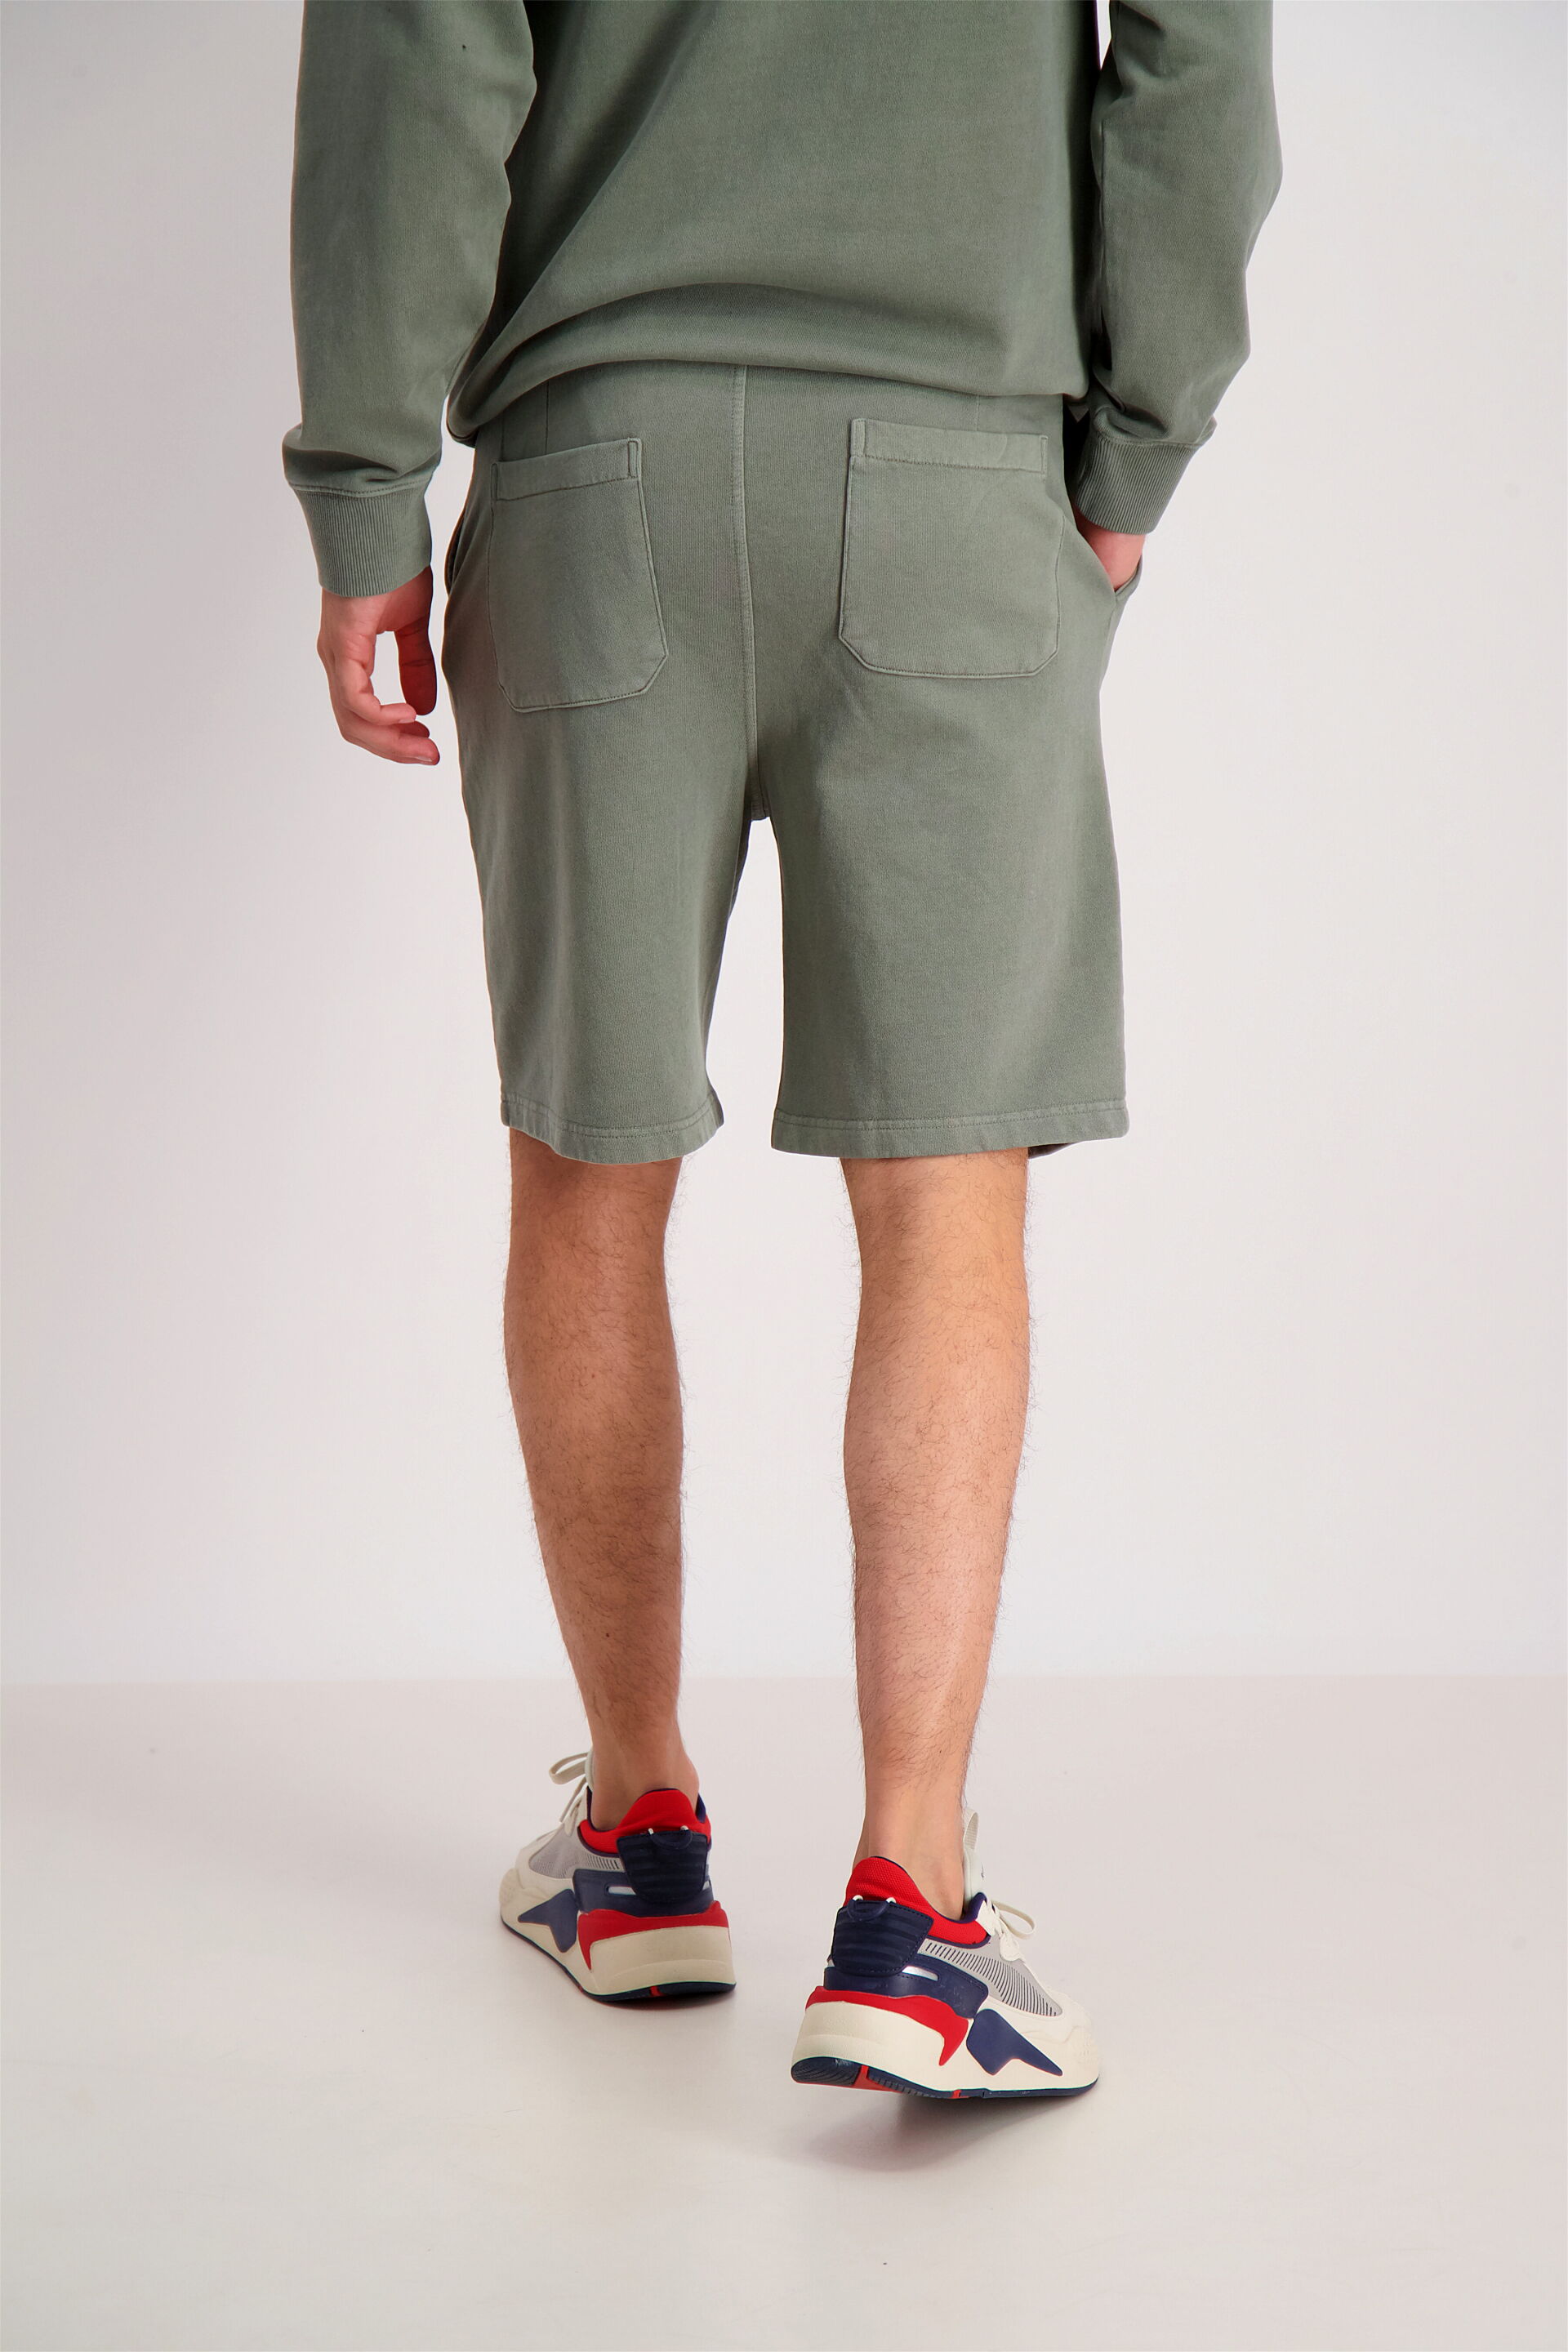 Junk de Luxe  Casual shorts 60-532001